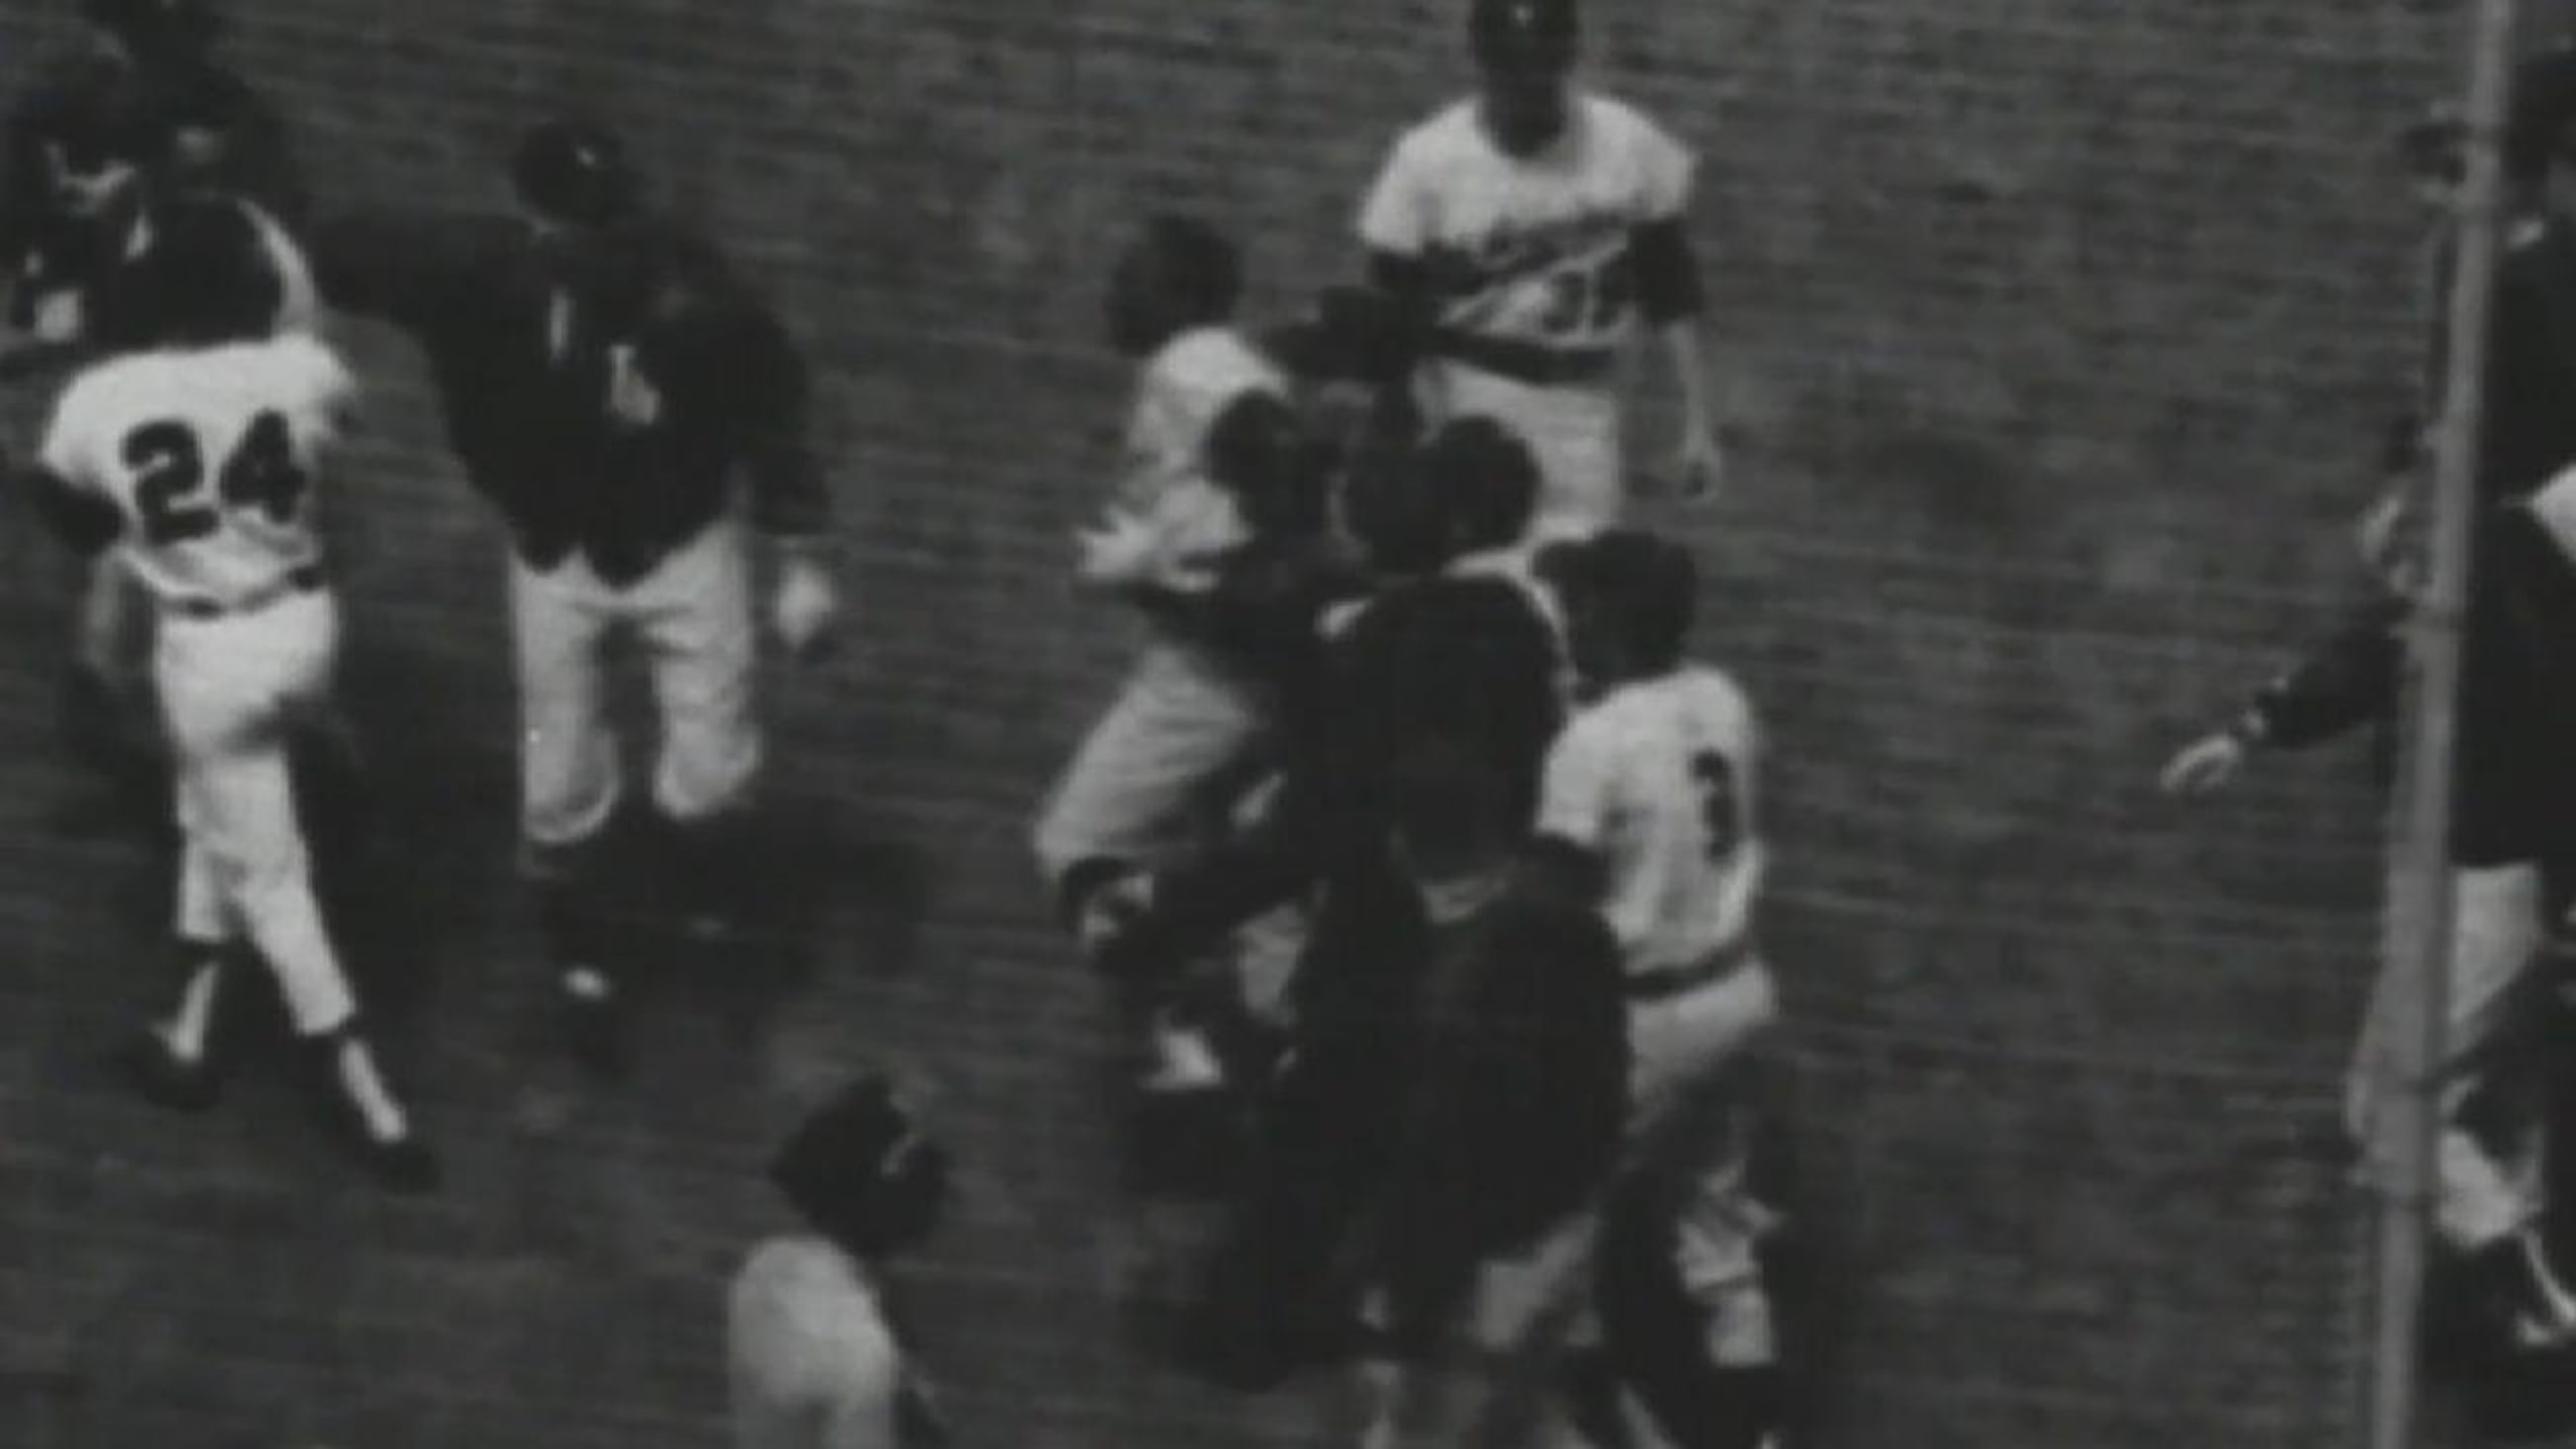 Marichal-Roseboro bat-wielding brawl 50 years later